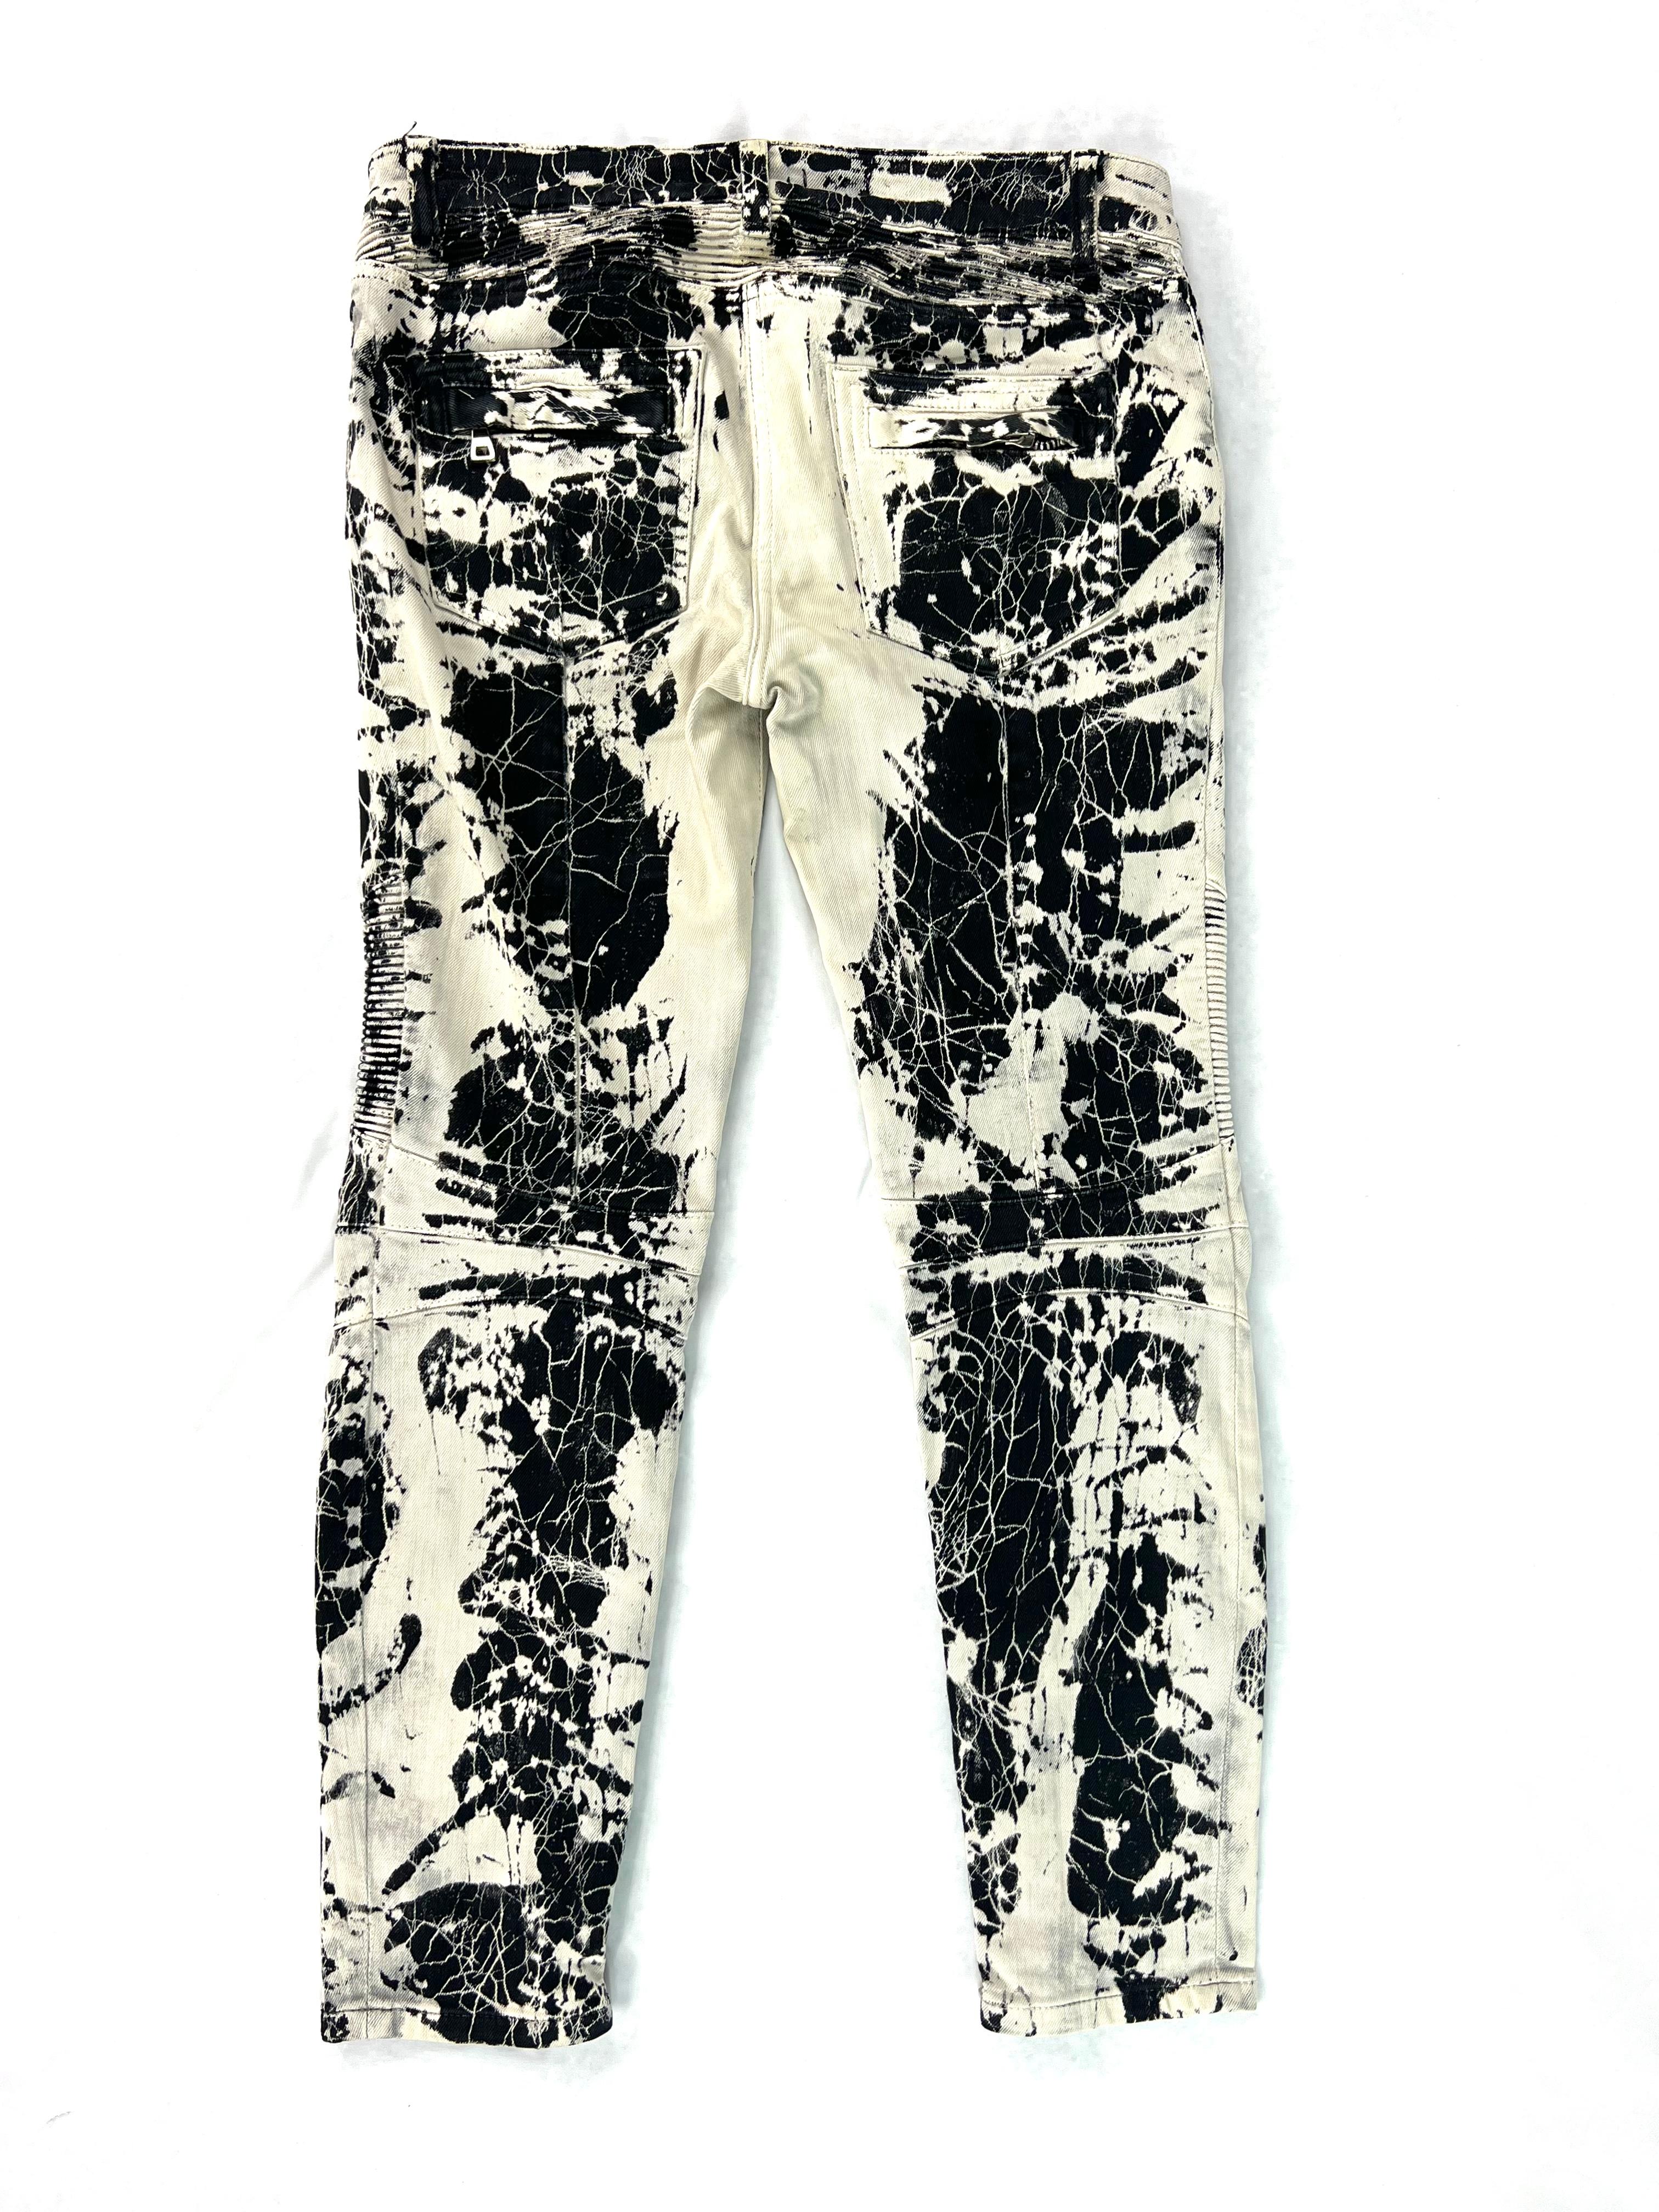 Balmain Black and White Denim Jean Pants, Size 40 For Sale 4